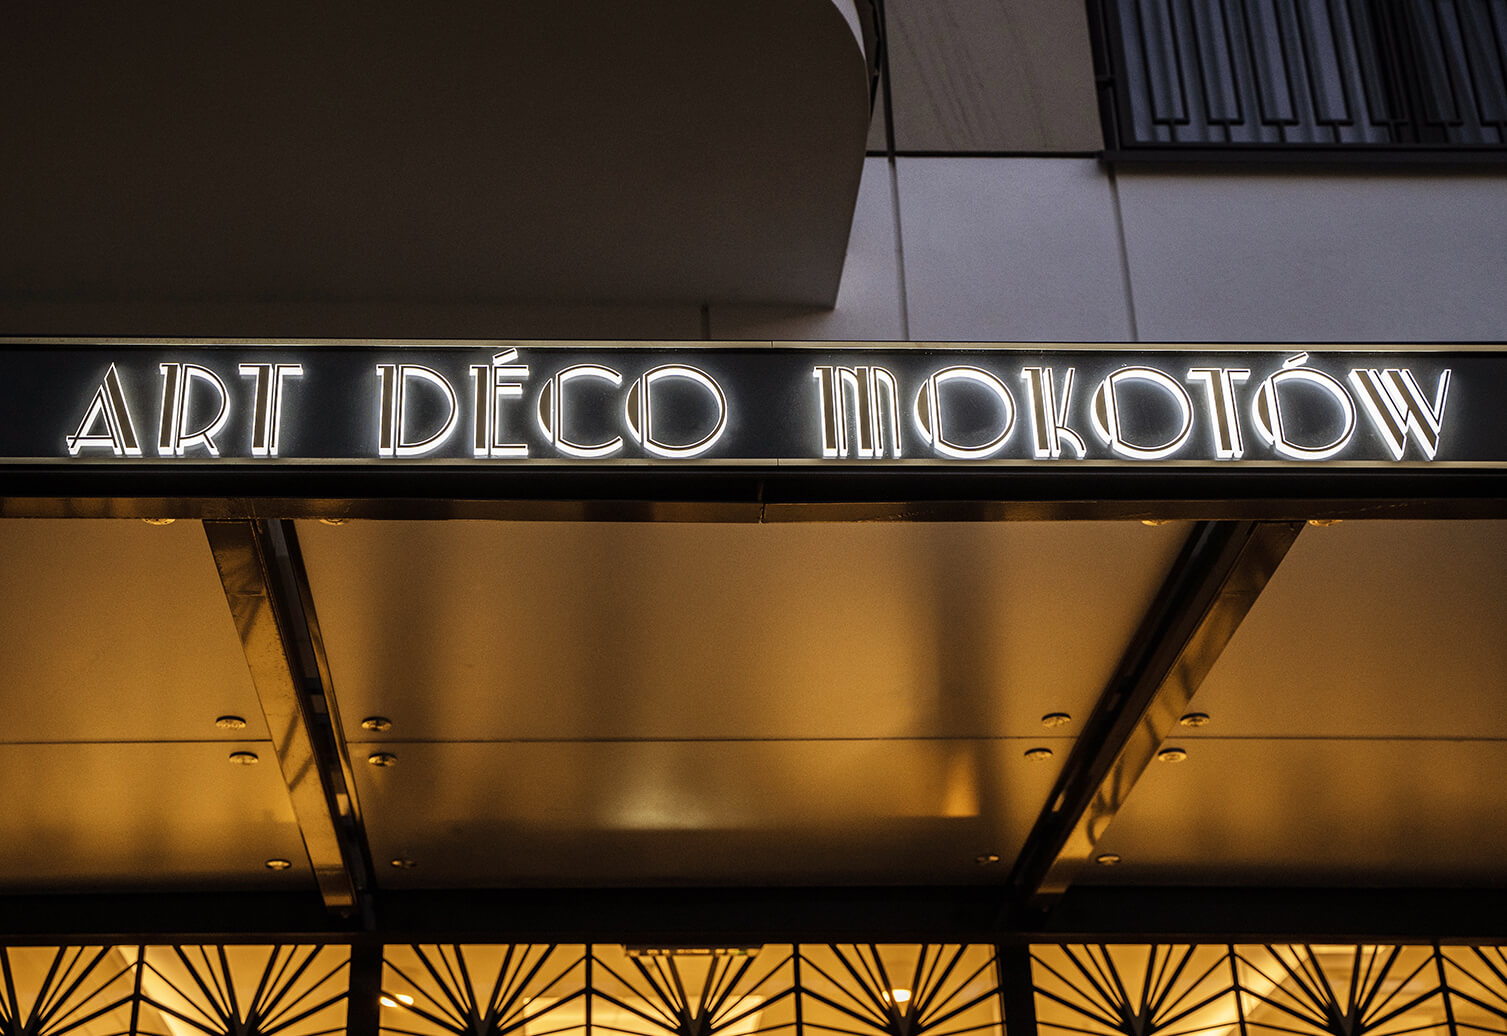 Art Deco Mokotow - Goldfarbene Dibond-Kassette über dem Mokotow-Eingang im Art-Déco-Stil, mit LED-Beleuchtung.